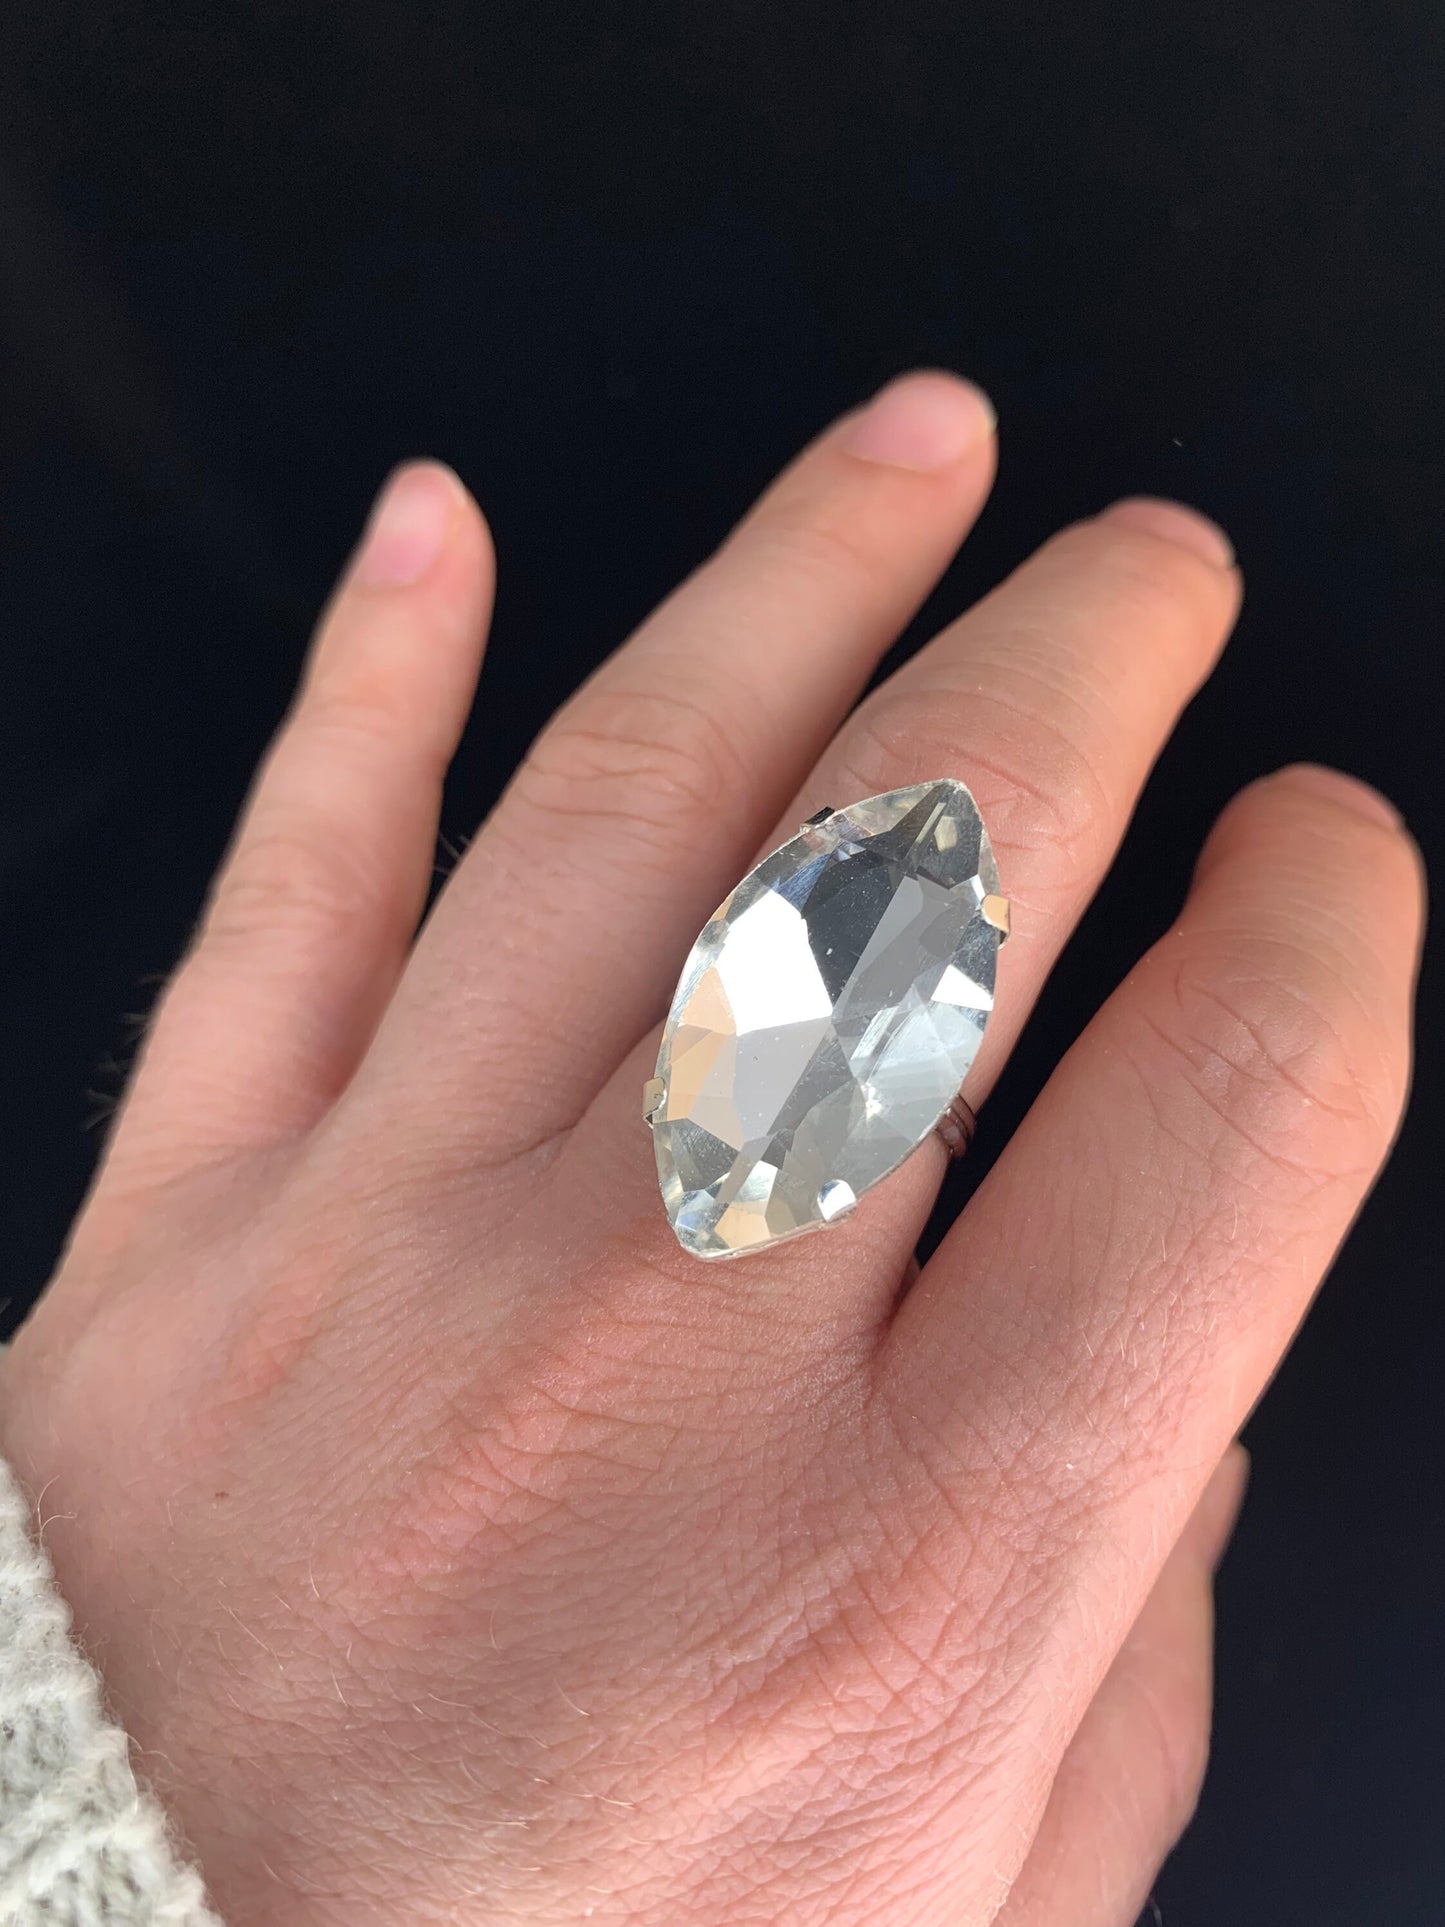 Crystal horse eye Ring / Cocktail Dress Ring / Adjustable back / Gift / Drag Queen Ring